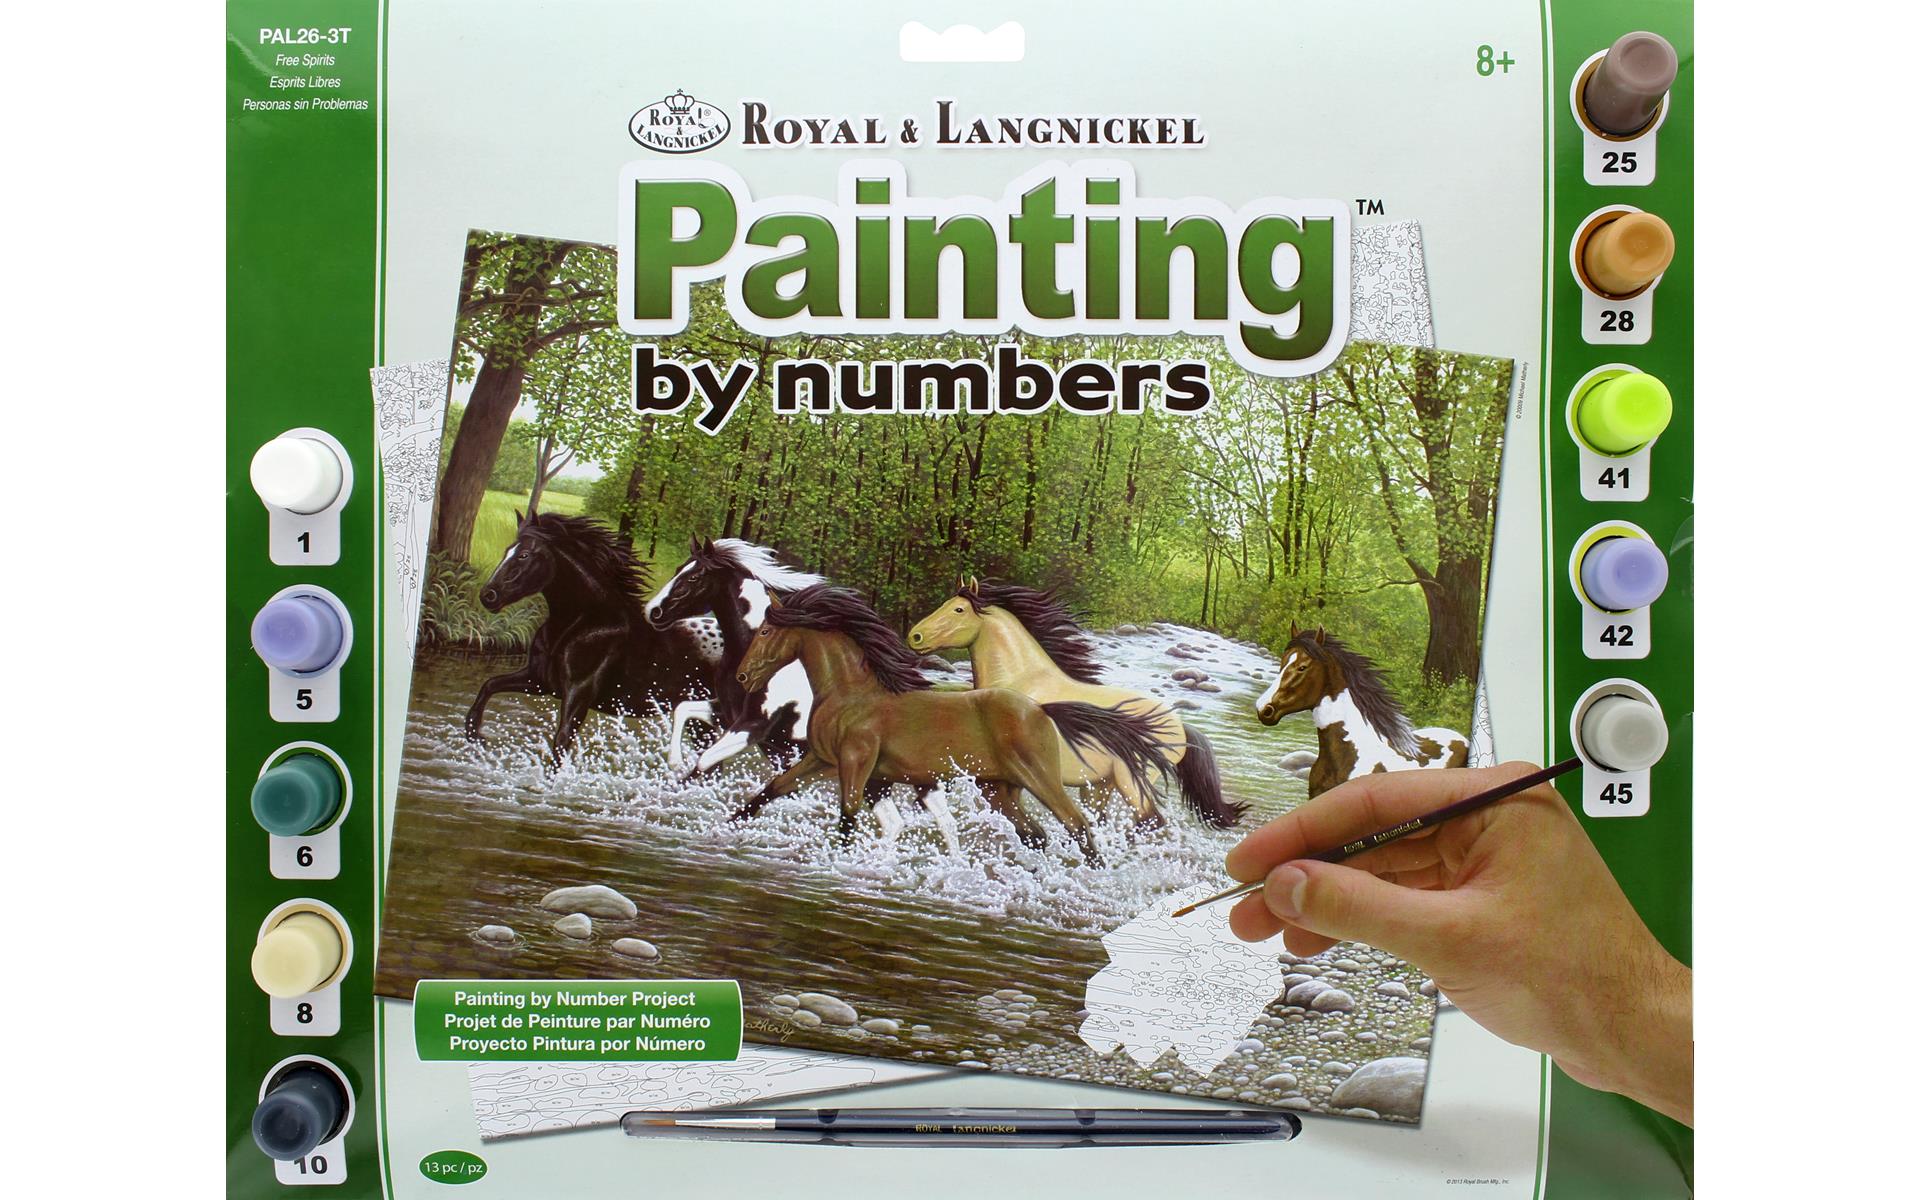 Royal Langnickel Paint by Number Kit - Free Spirit